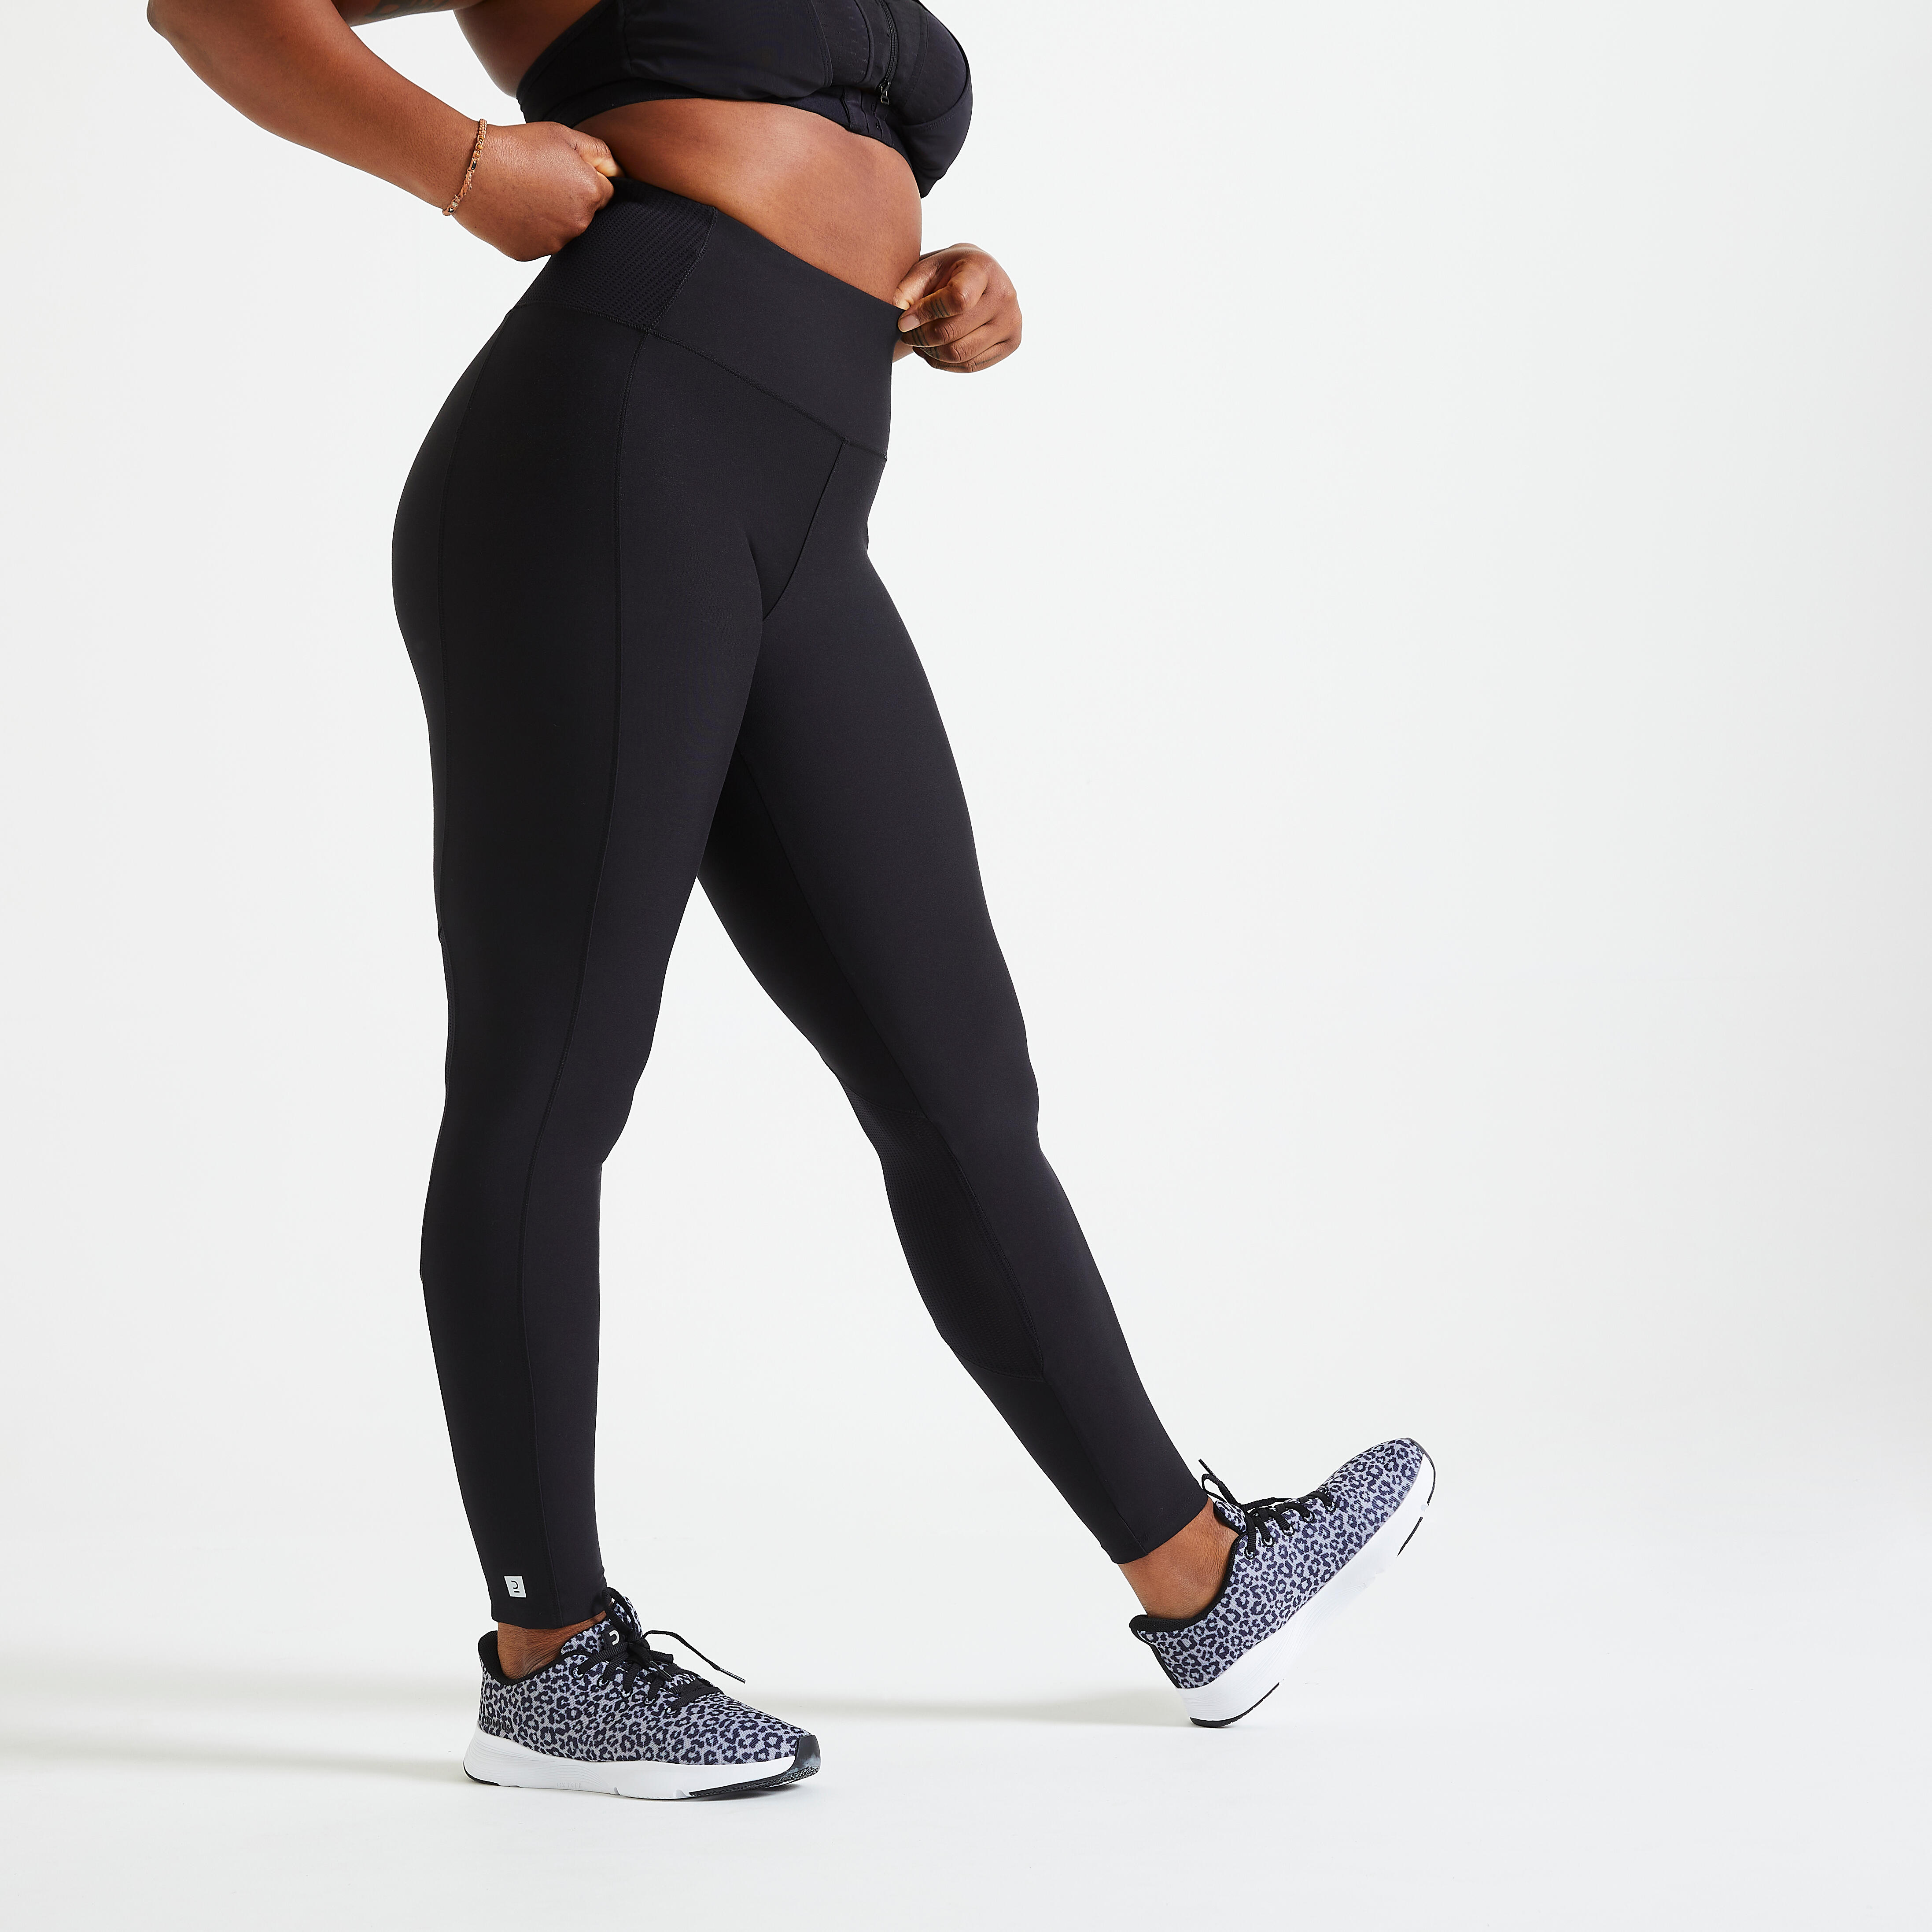 Legging de sport femme – FTI 120 noir - DOMYOS